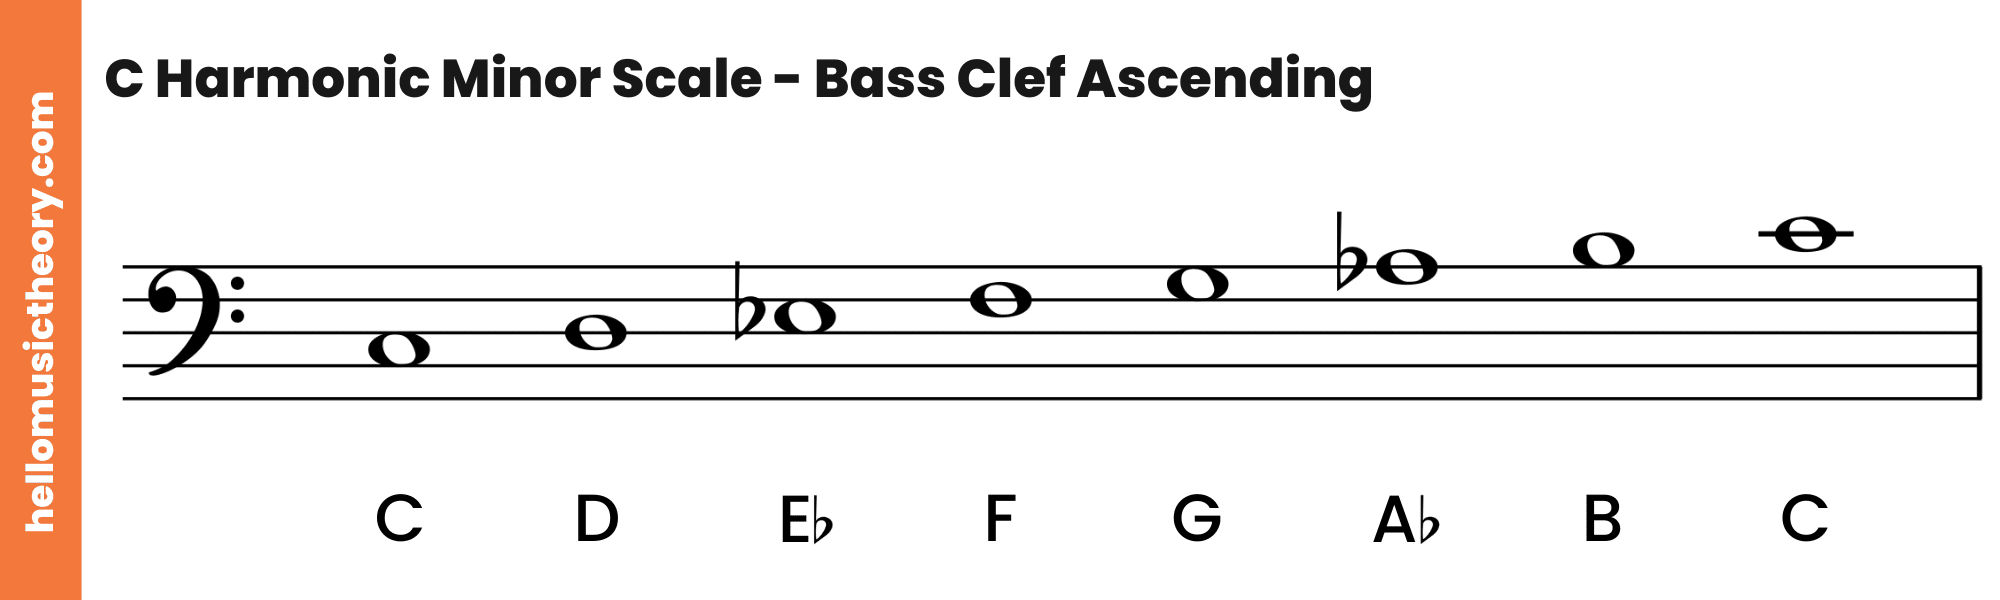 C Harmonic Minor Scale Bass Clef Ascending